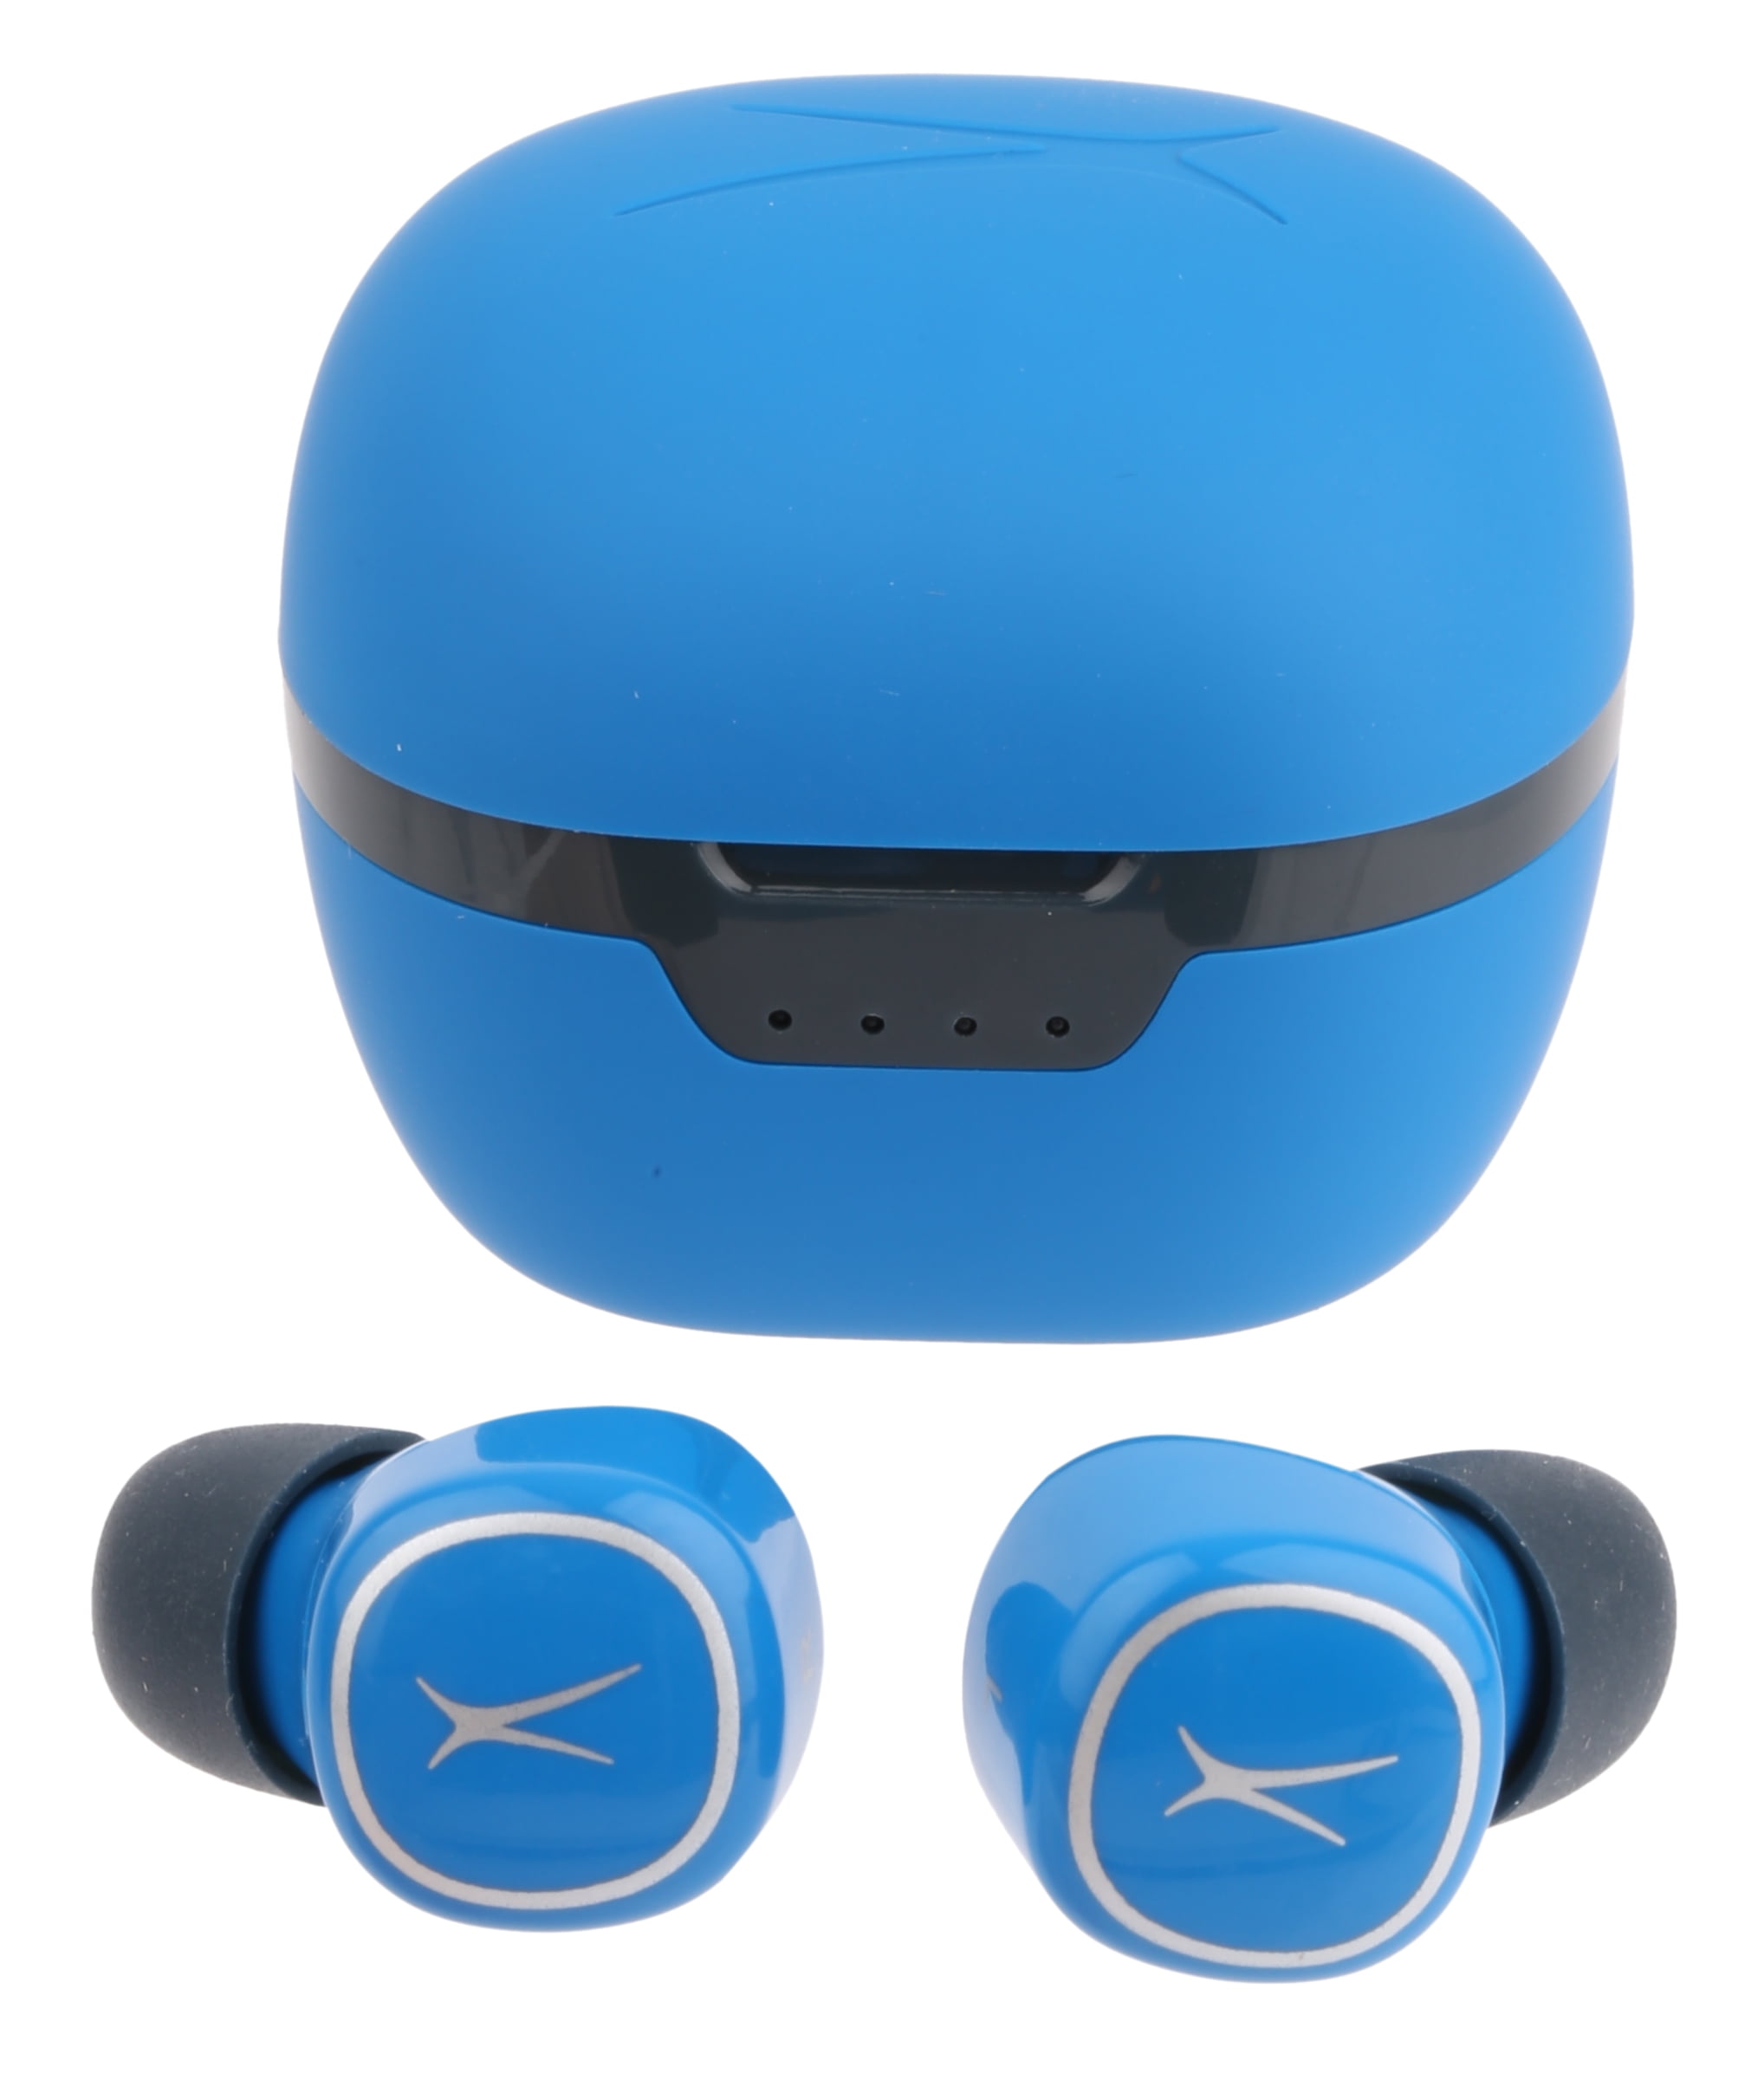 Altec Lansing Nanopods Bluetooth True Wireless In-Ear Earbuds with